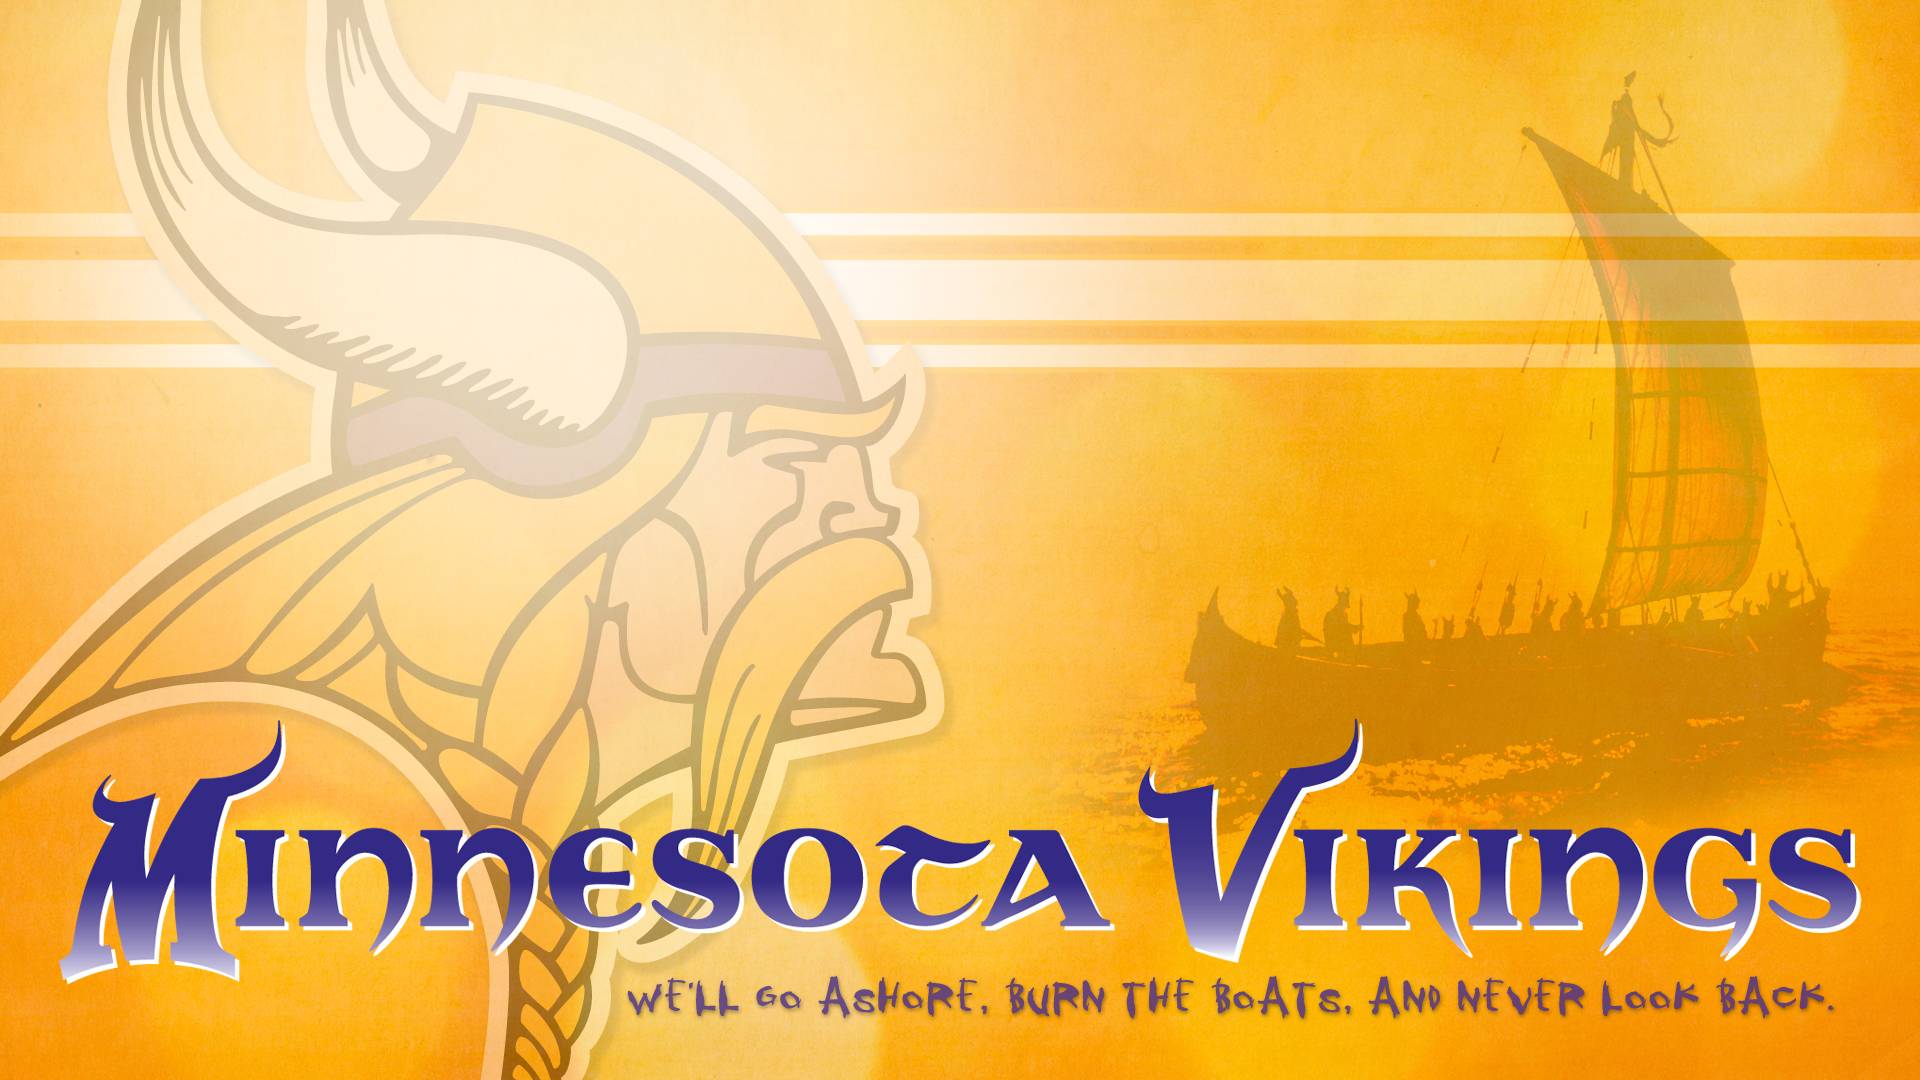 Minnesota Vikings HD Wallpaper. Download HD Wallpaper, High